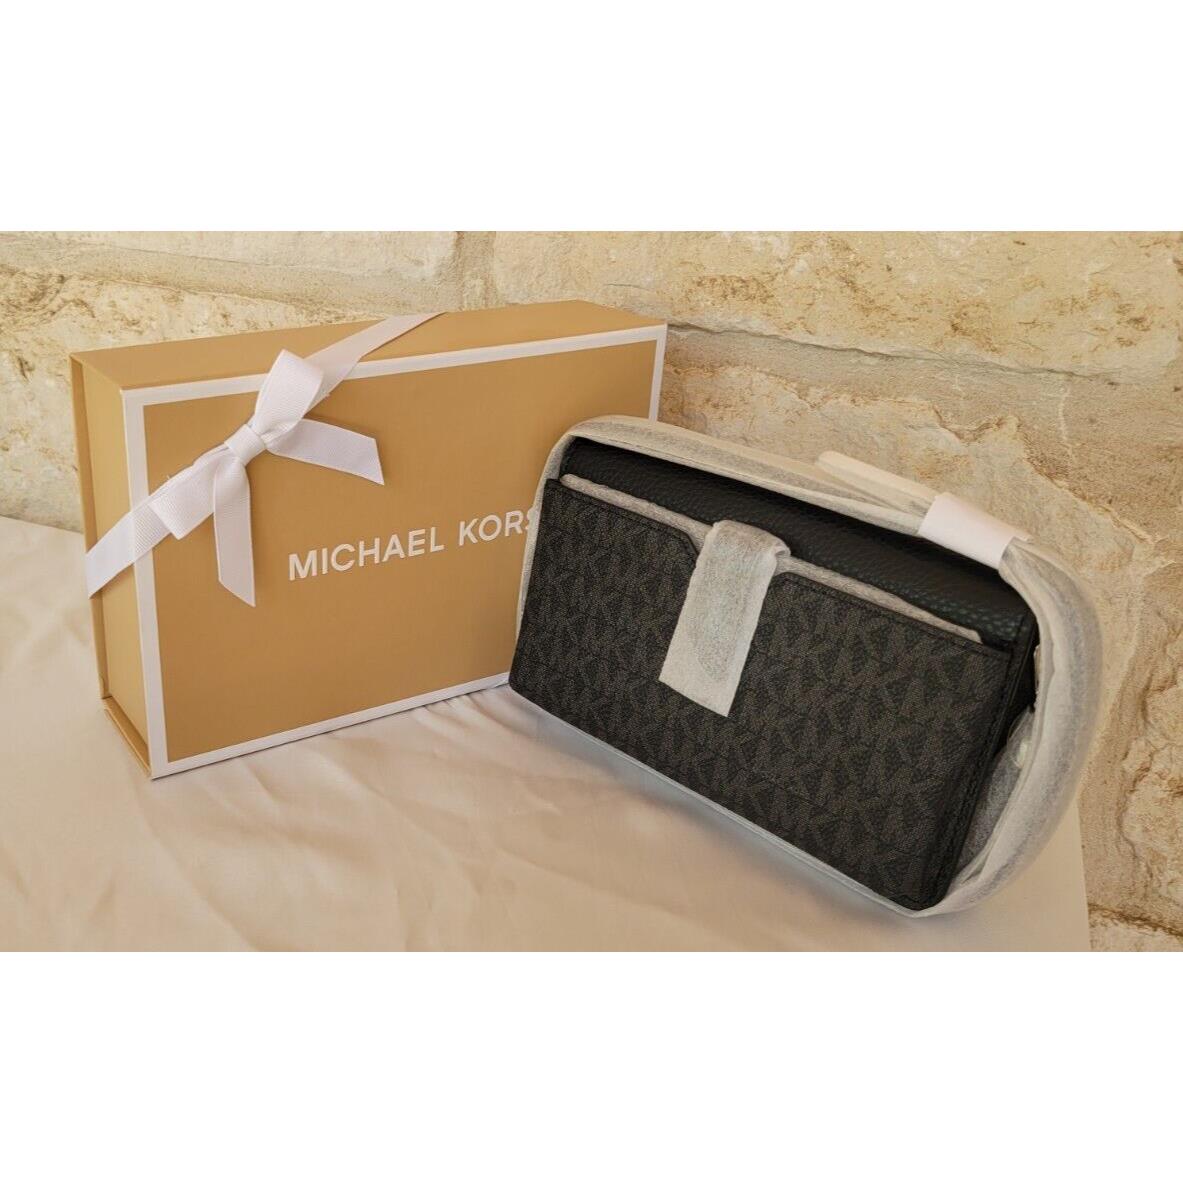 Michael Kors  bag   - Black Handle/Strap, Silver Hardware, Black Exterior 2